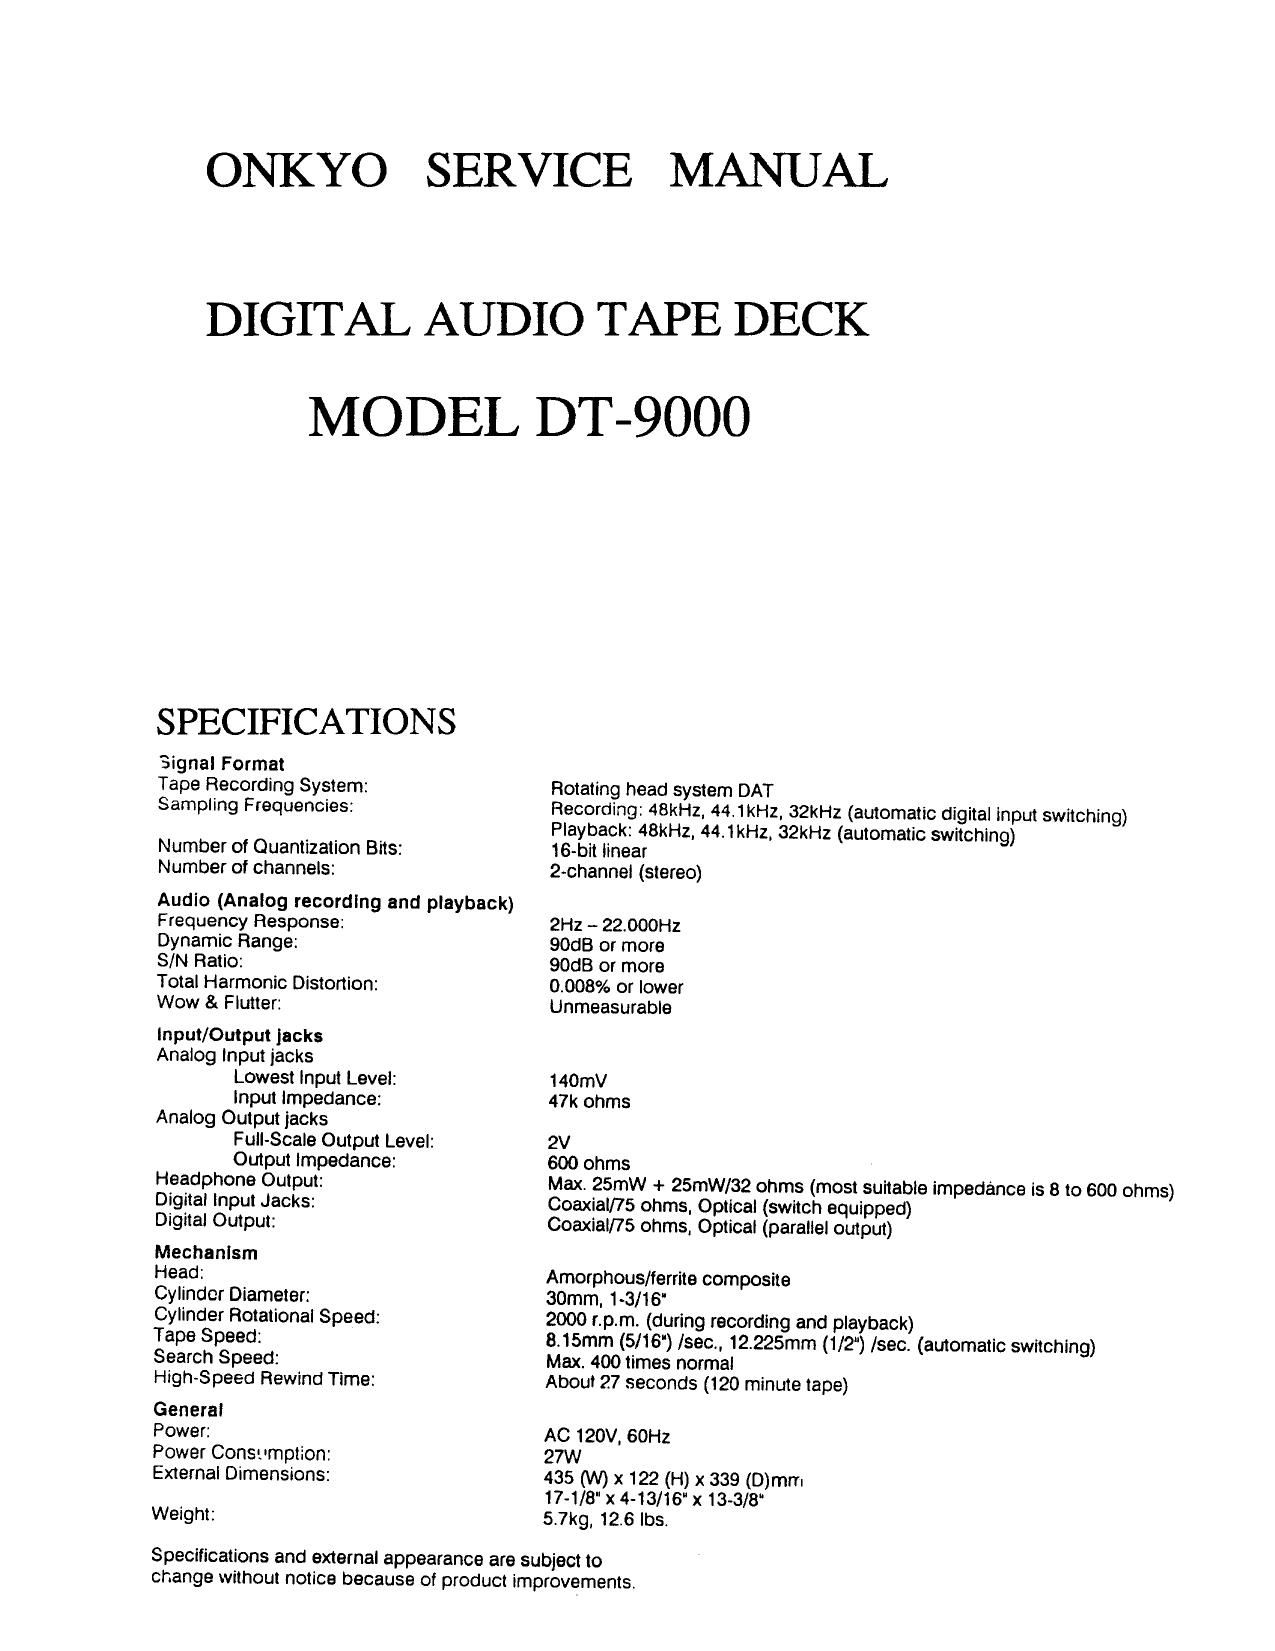 Onkyo DT 9000 Service Manual